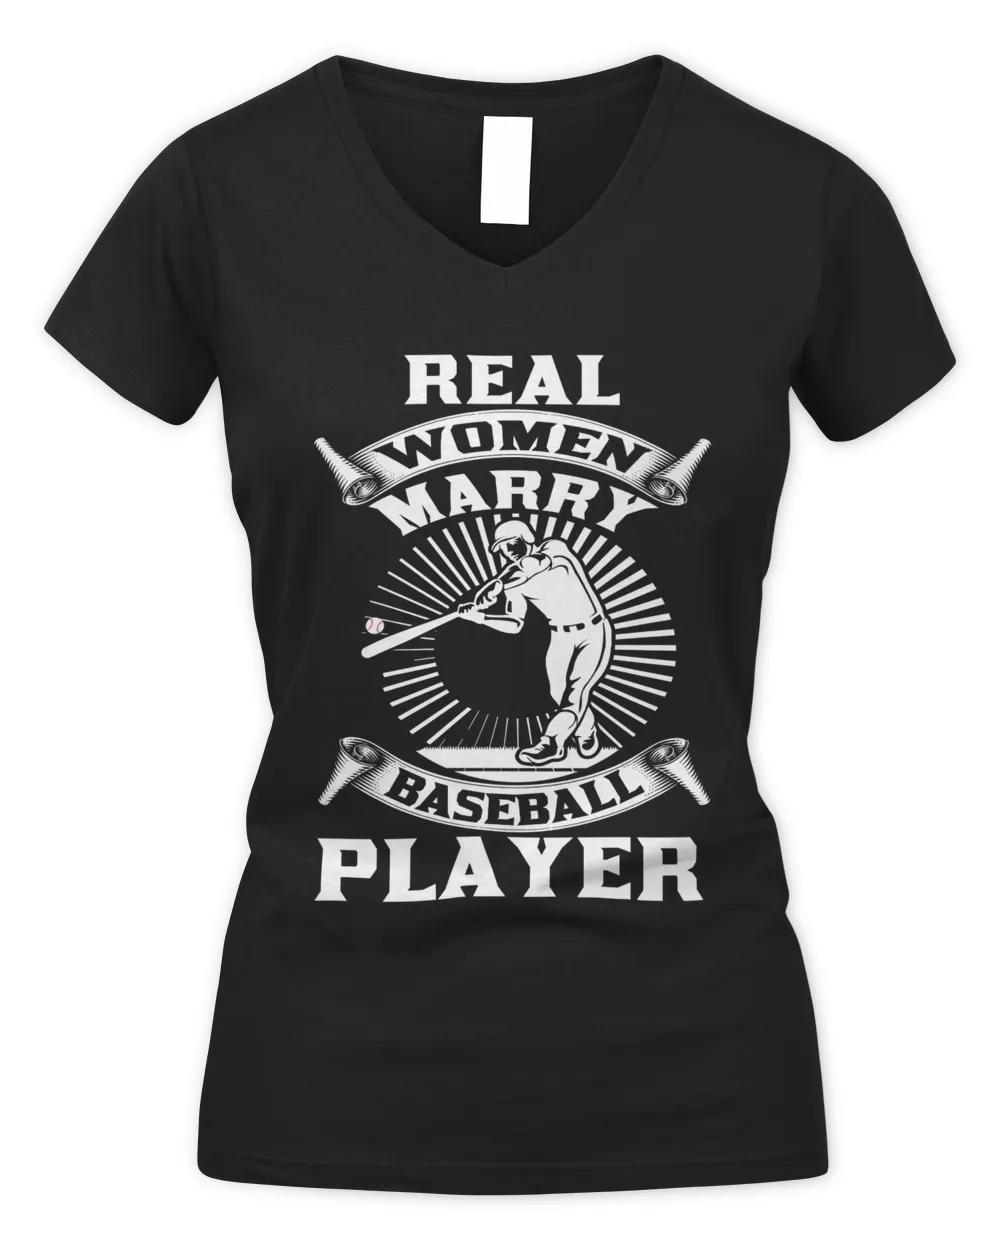 Real women marry baseball player